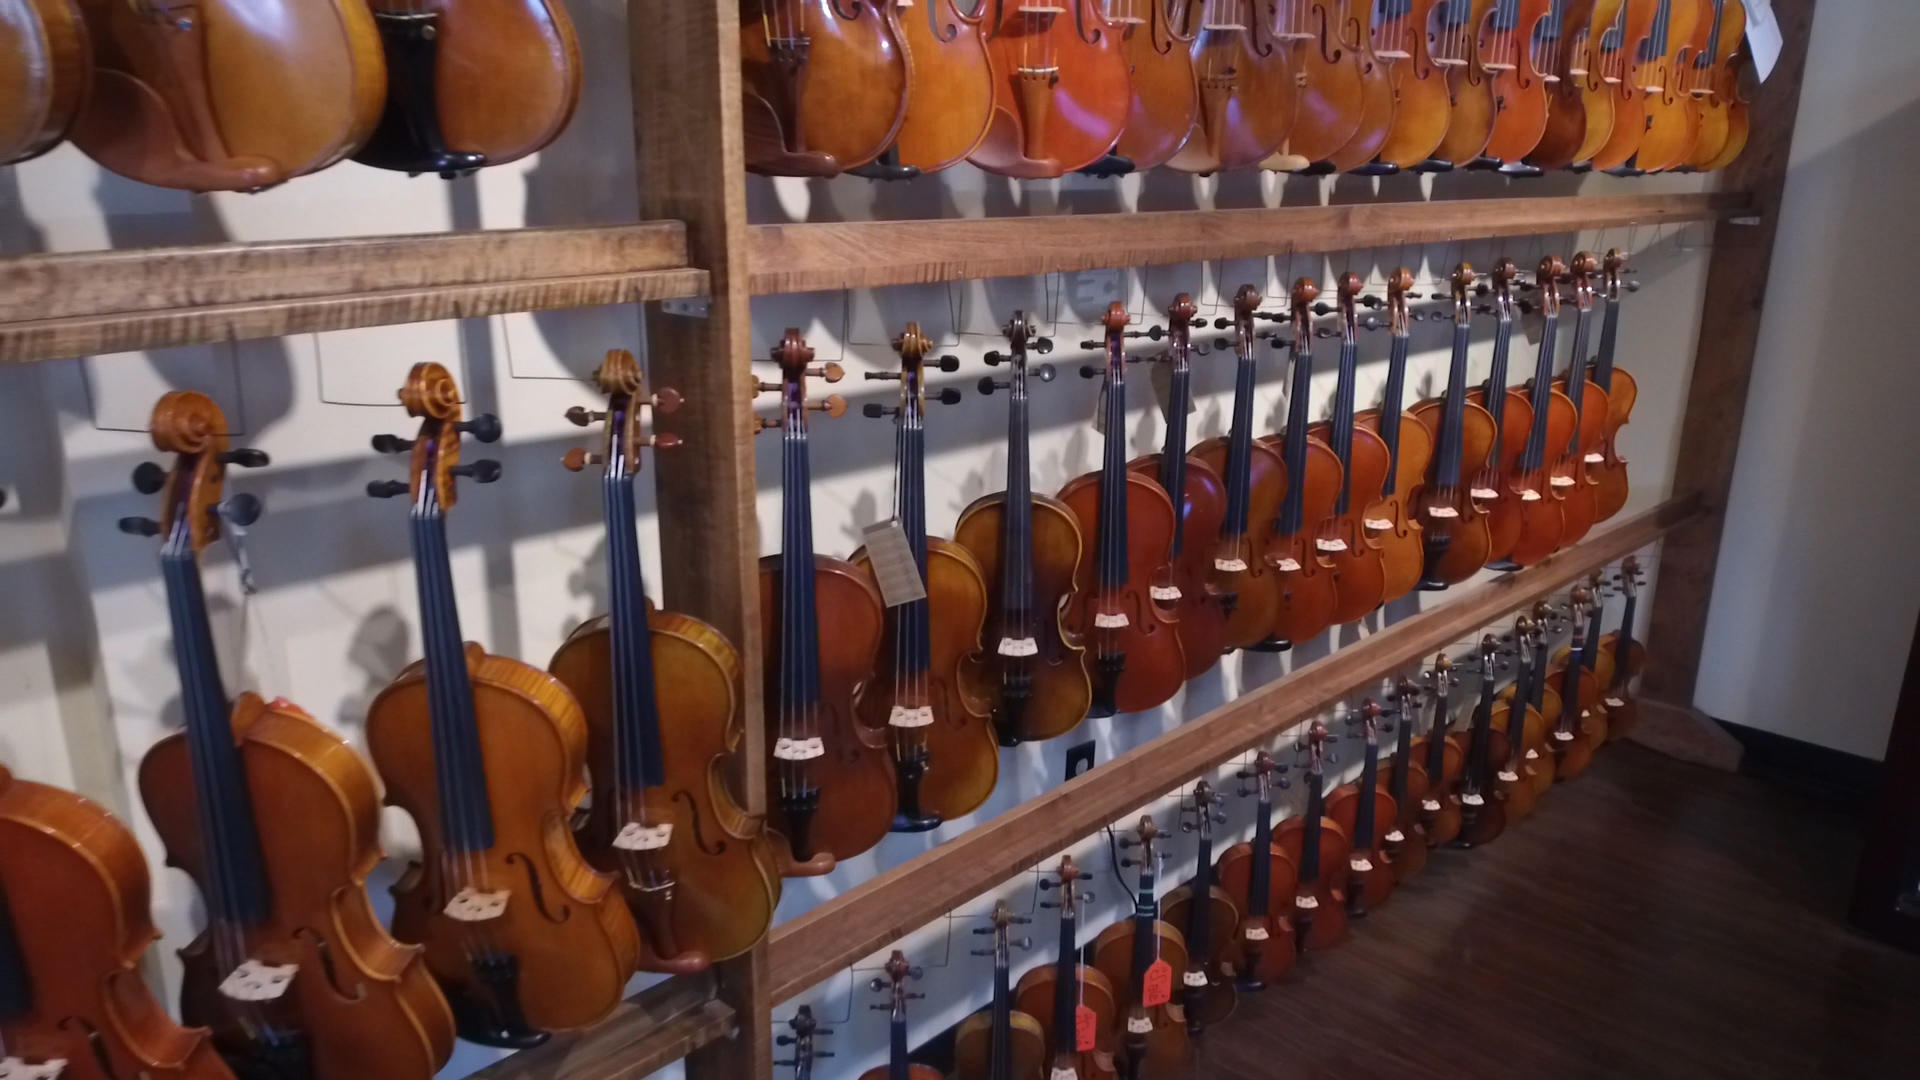 Violins at The Violin Shop in Tampa